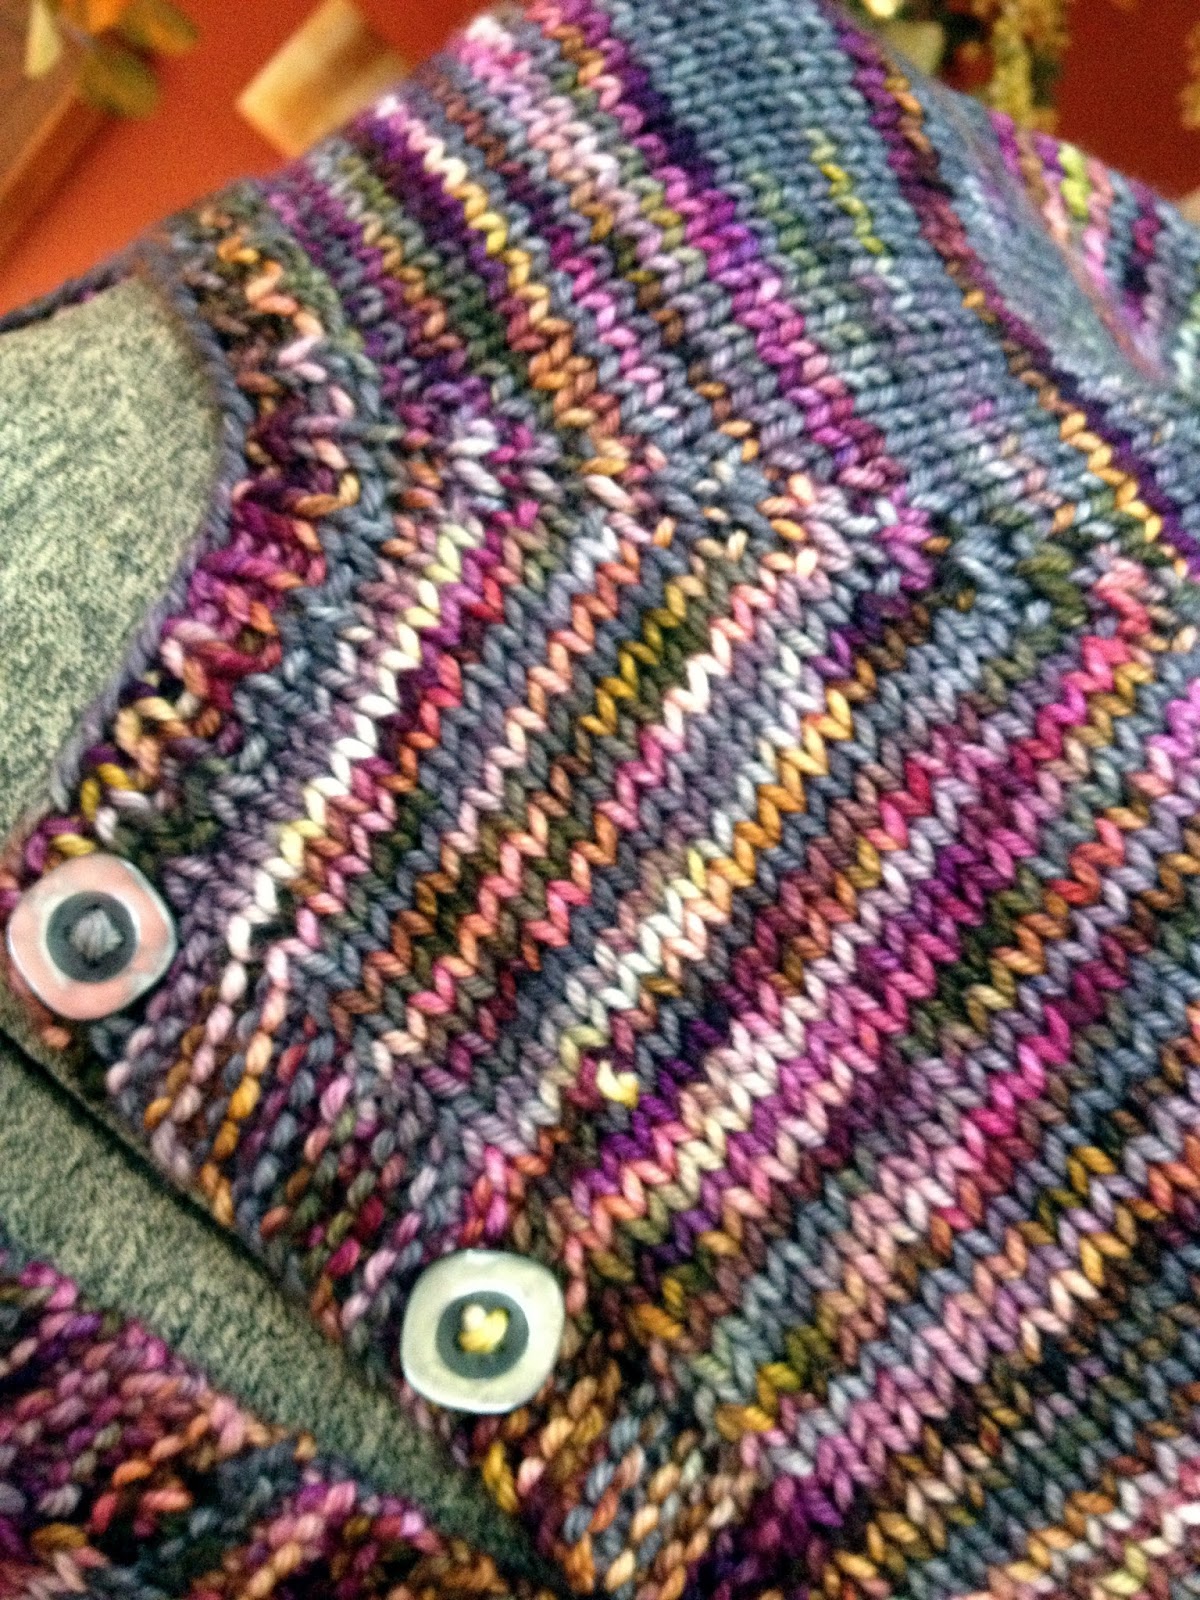 Fiddlesticks - My crochet and knitting ramblings.: My First Sweater!